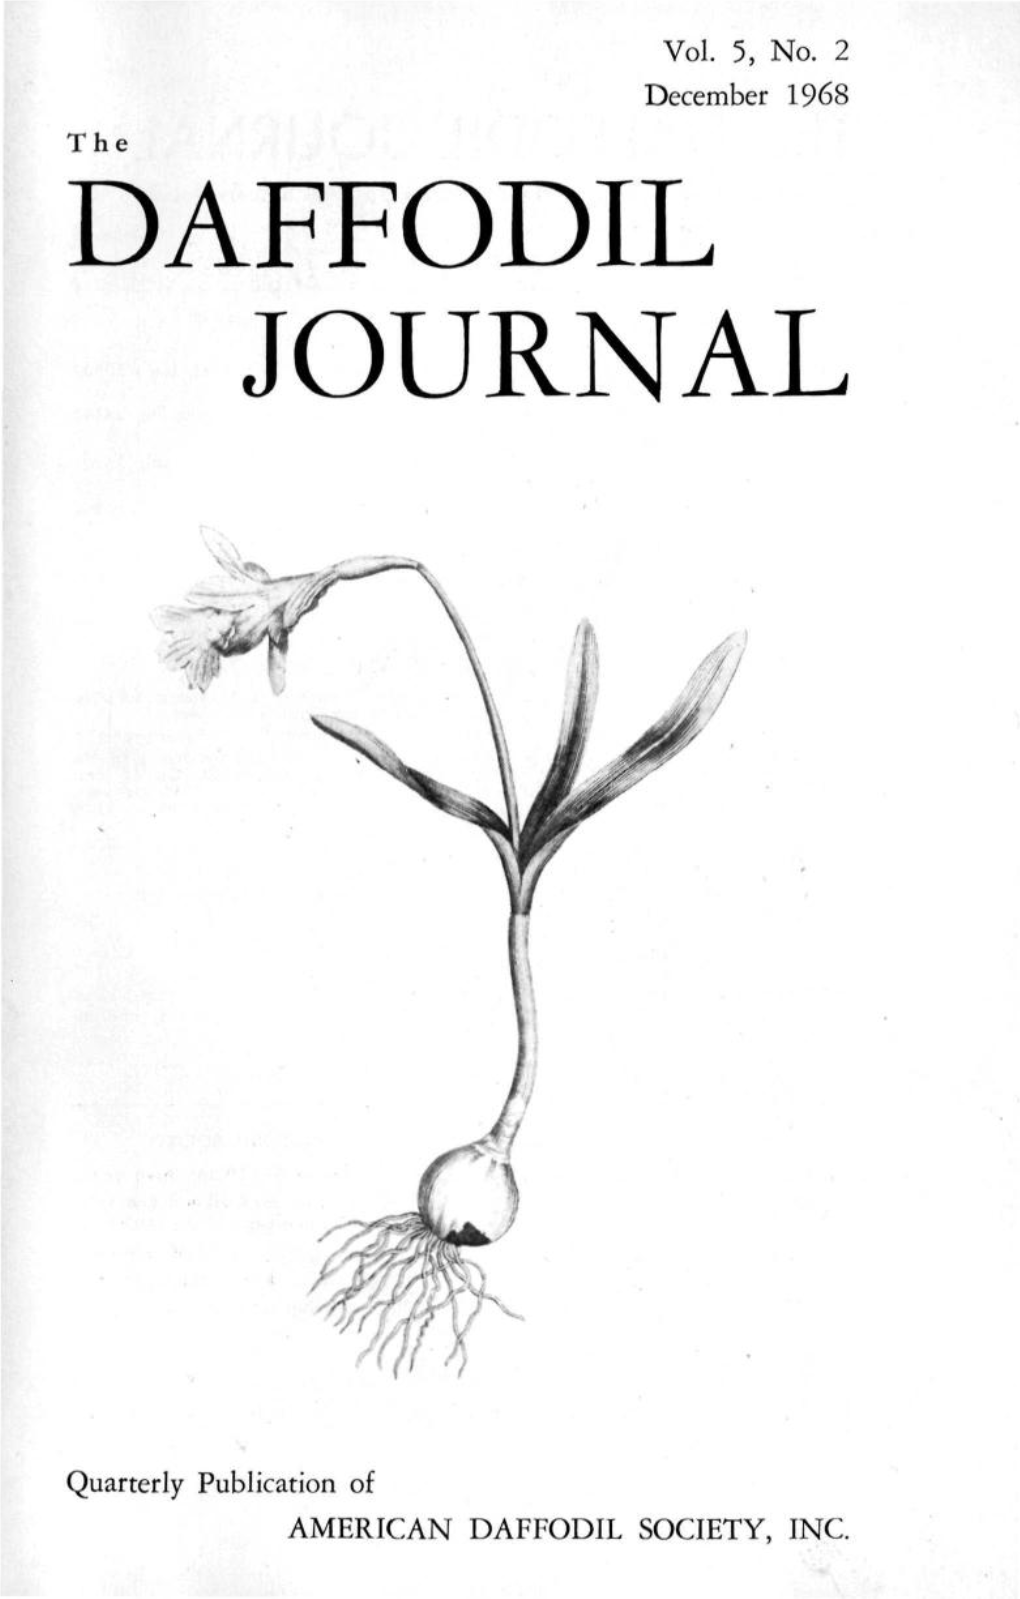 1968 December, American Daffodil Society Journal